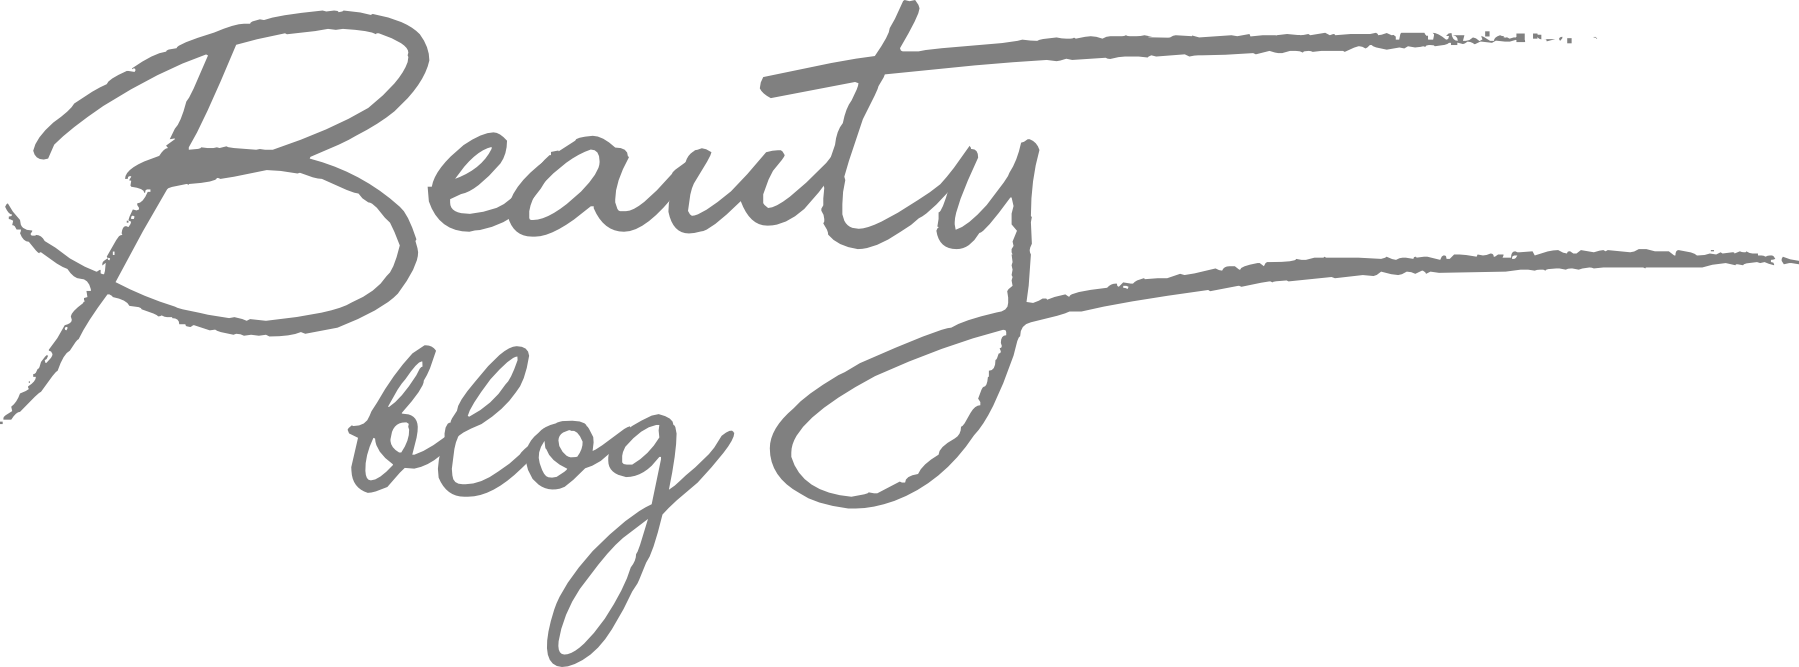 BeautyBlog